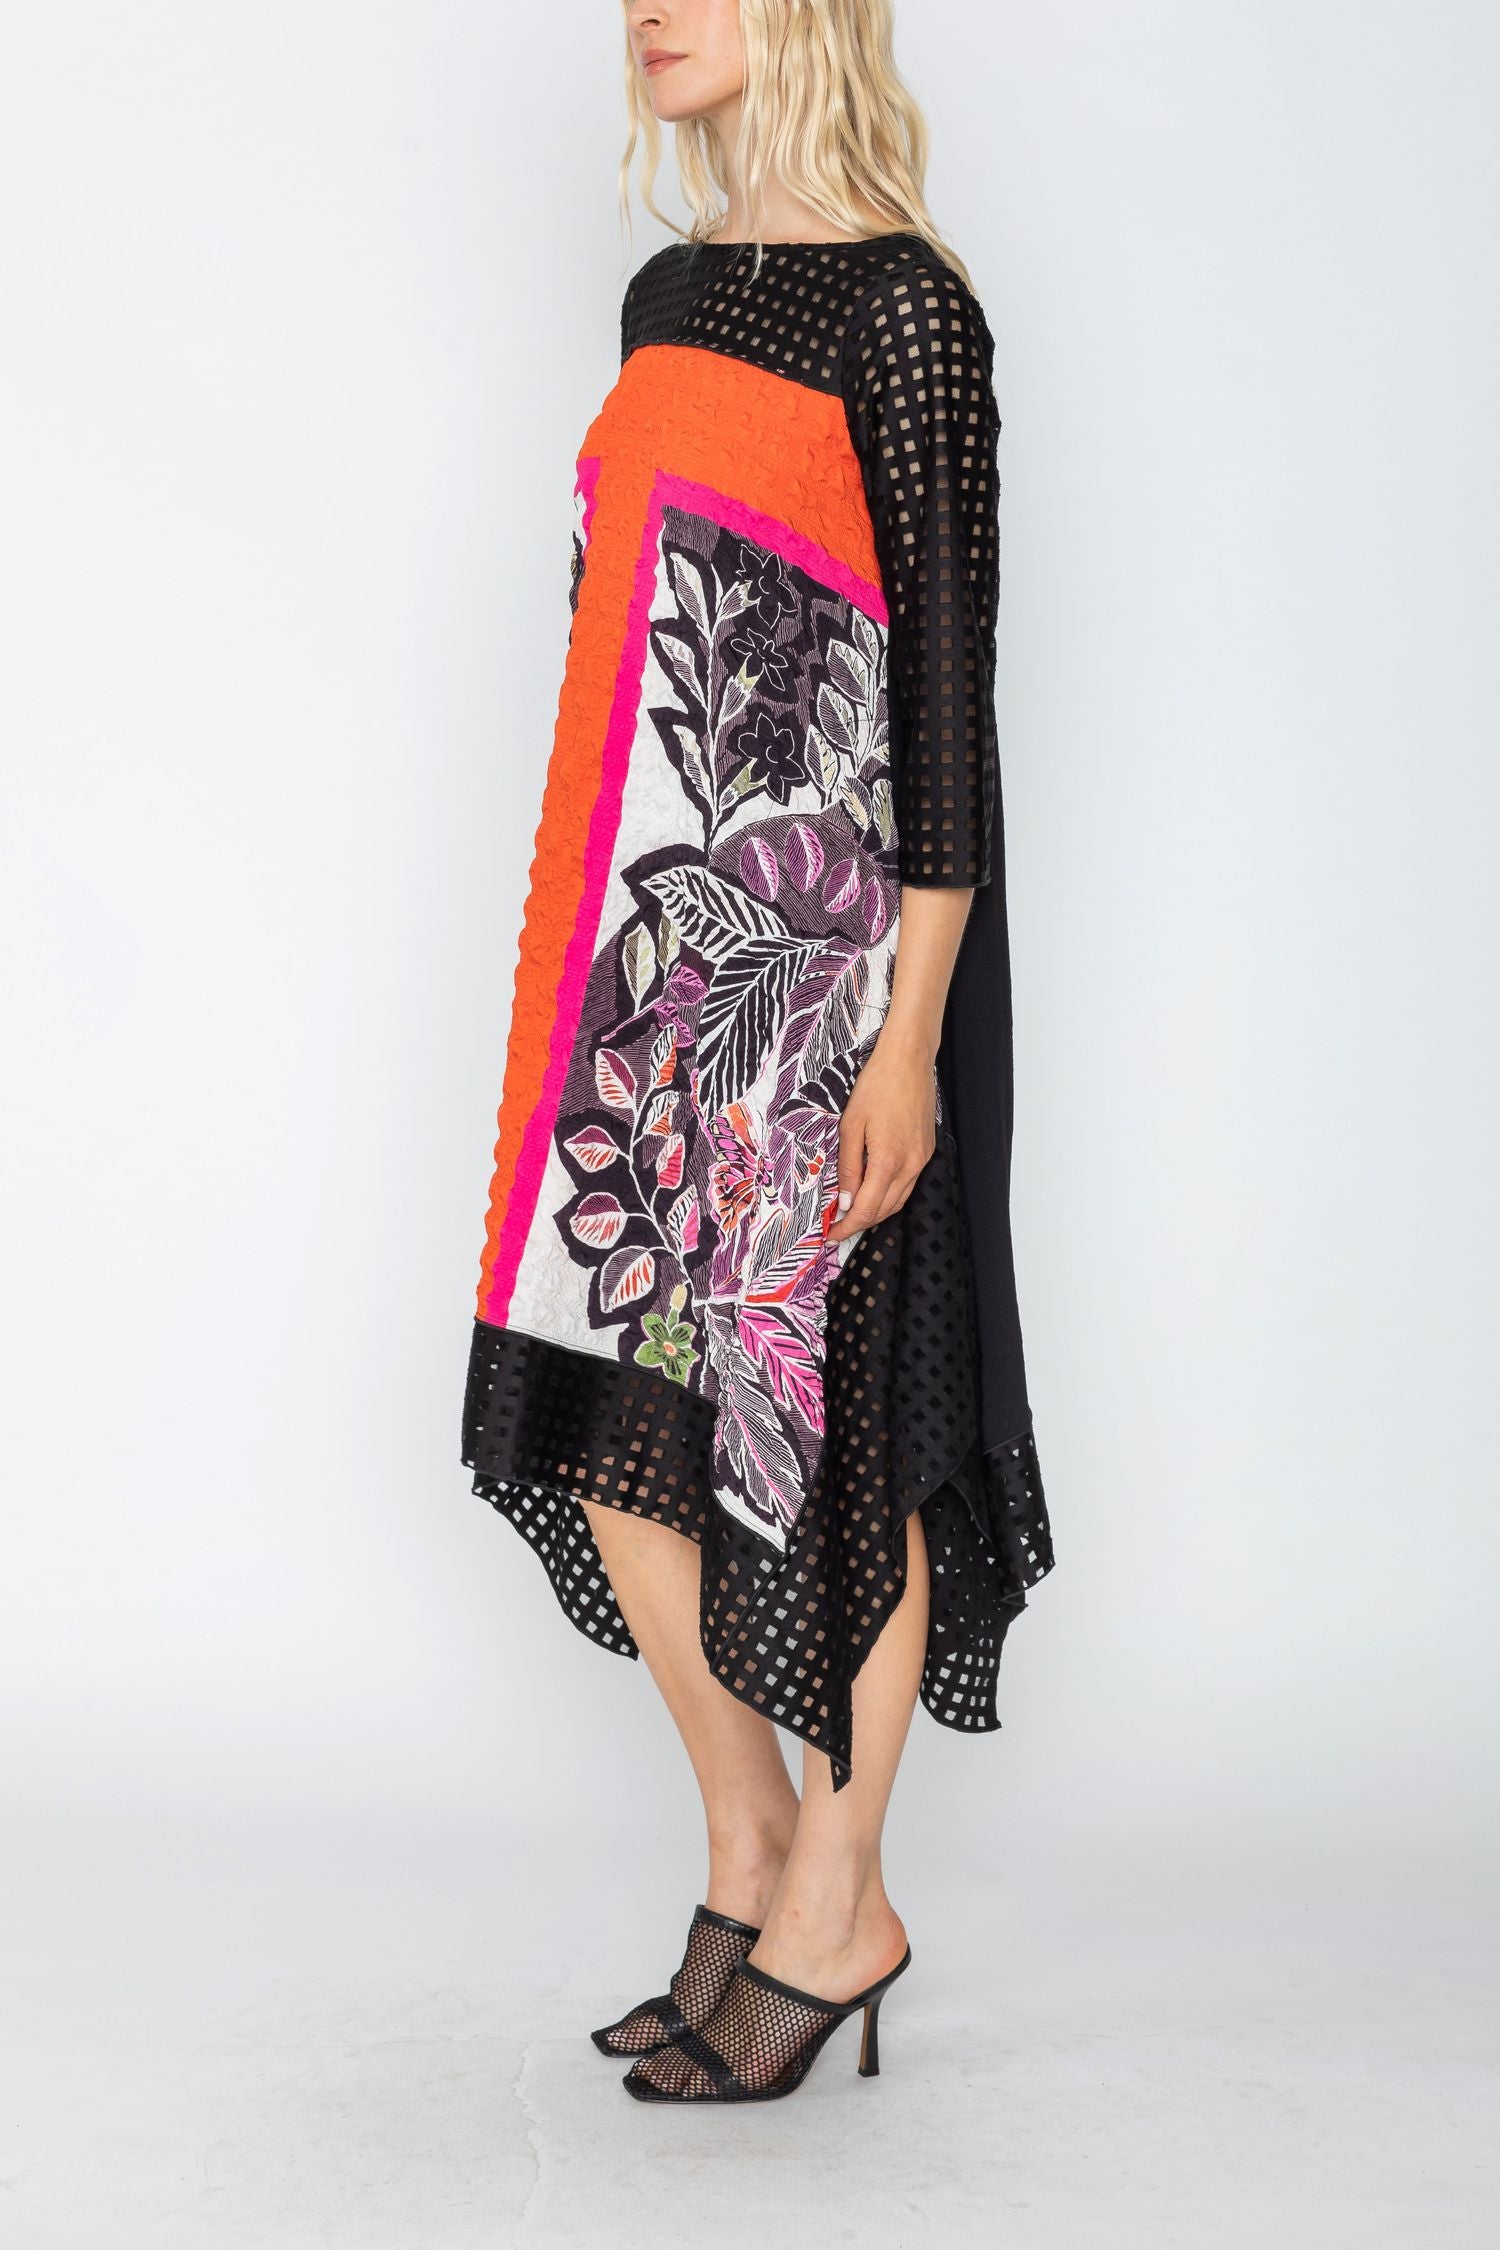 Coral 3/4 Sleeve Dress W/ Floral Print